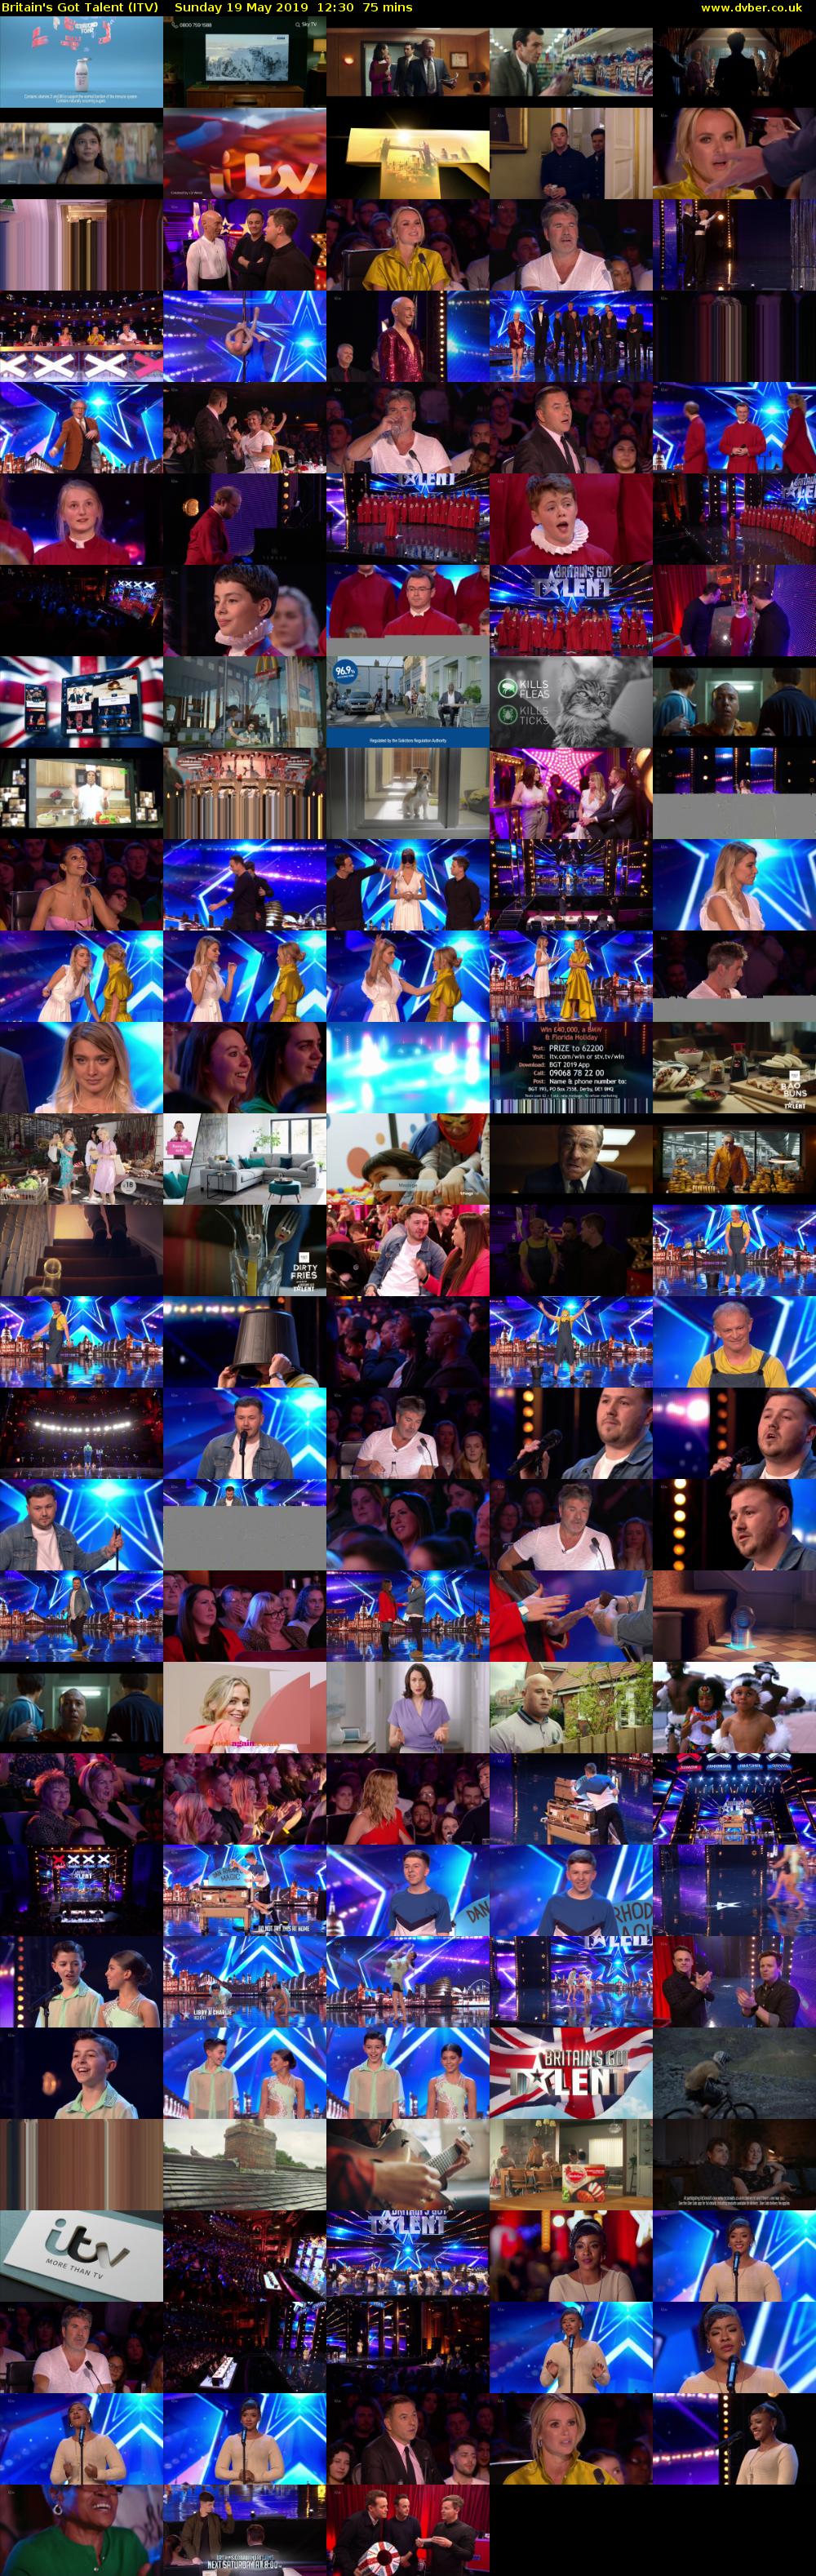 Britain's Got Talent (ITV) Sunday 19 May 2019 12:30 - 13:45